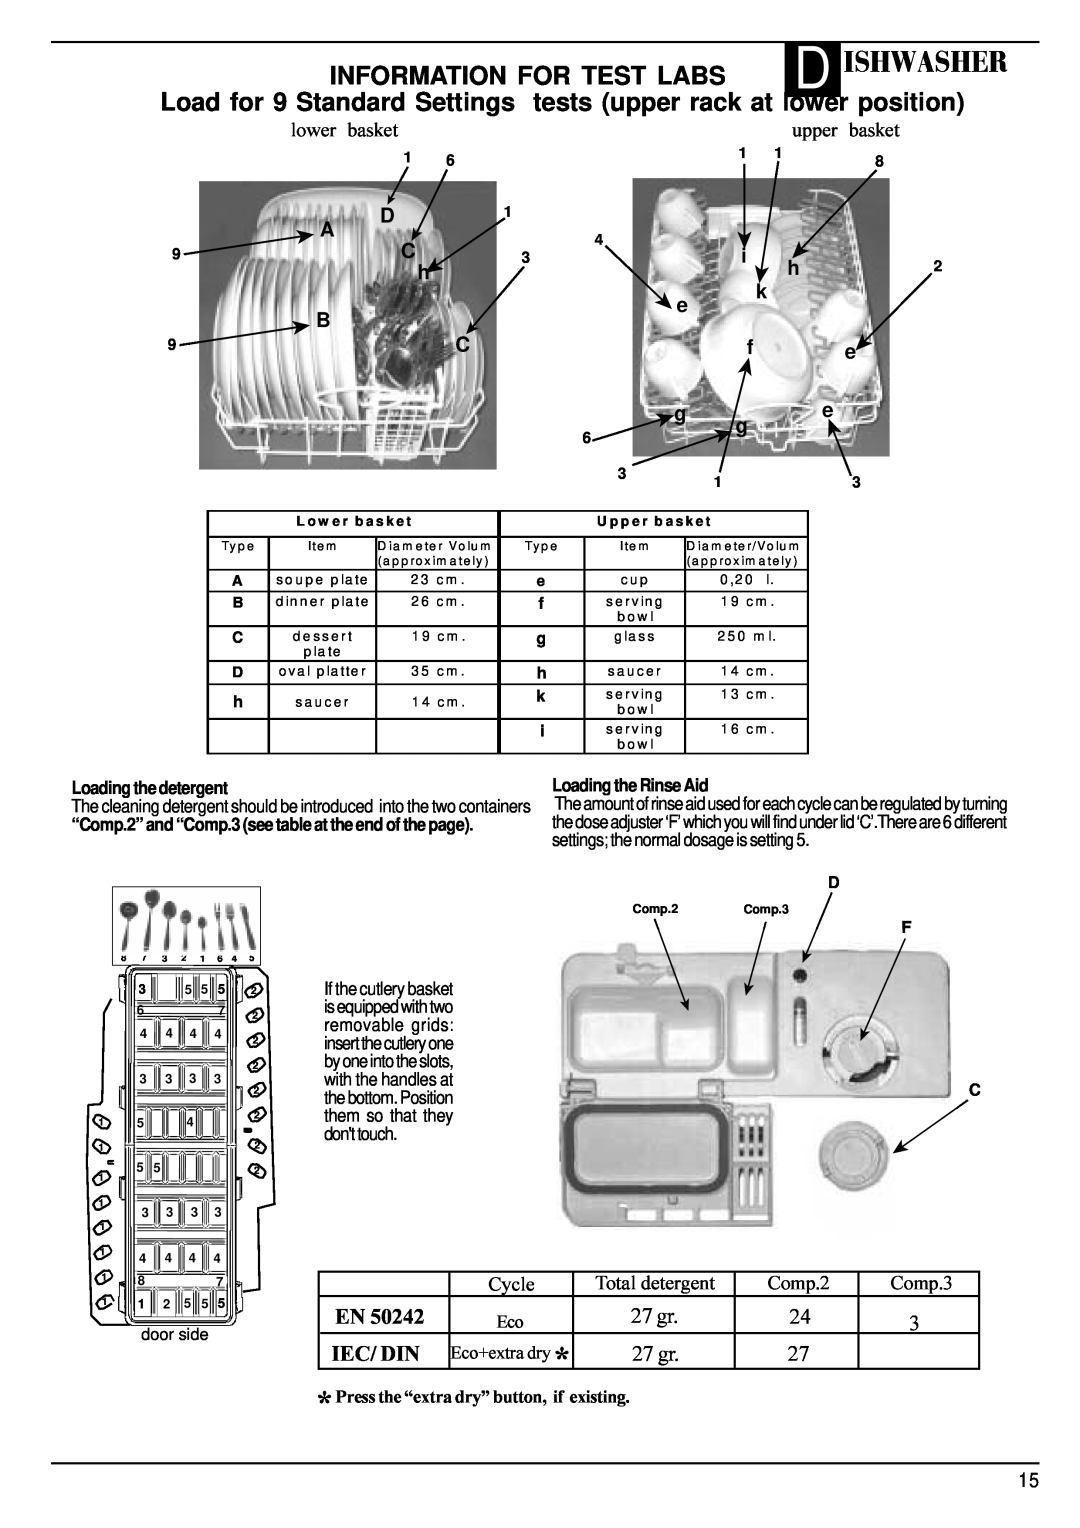 Hotpoint SDW 60 Ishwasher, Information For Test Labs, Load for 9 Standard Settings tests upper rack at, position, 27 gr 